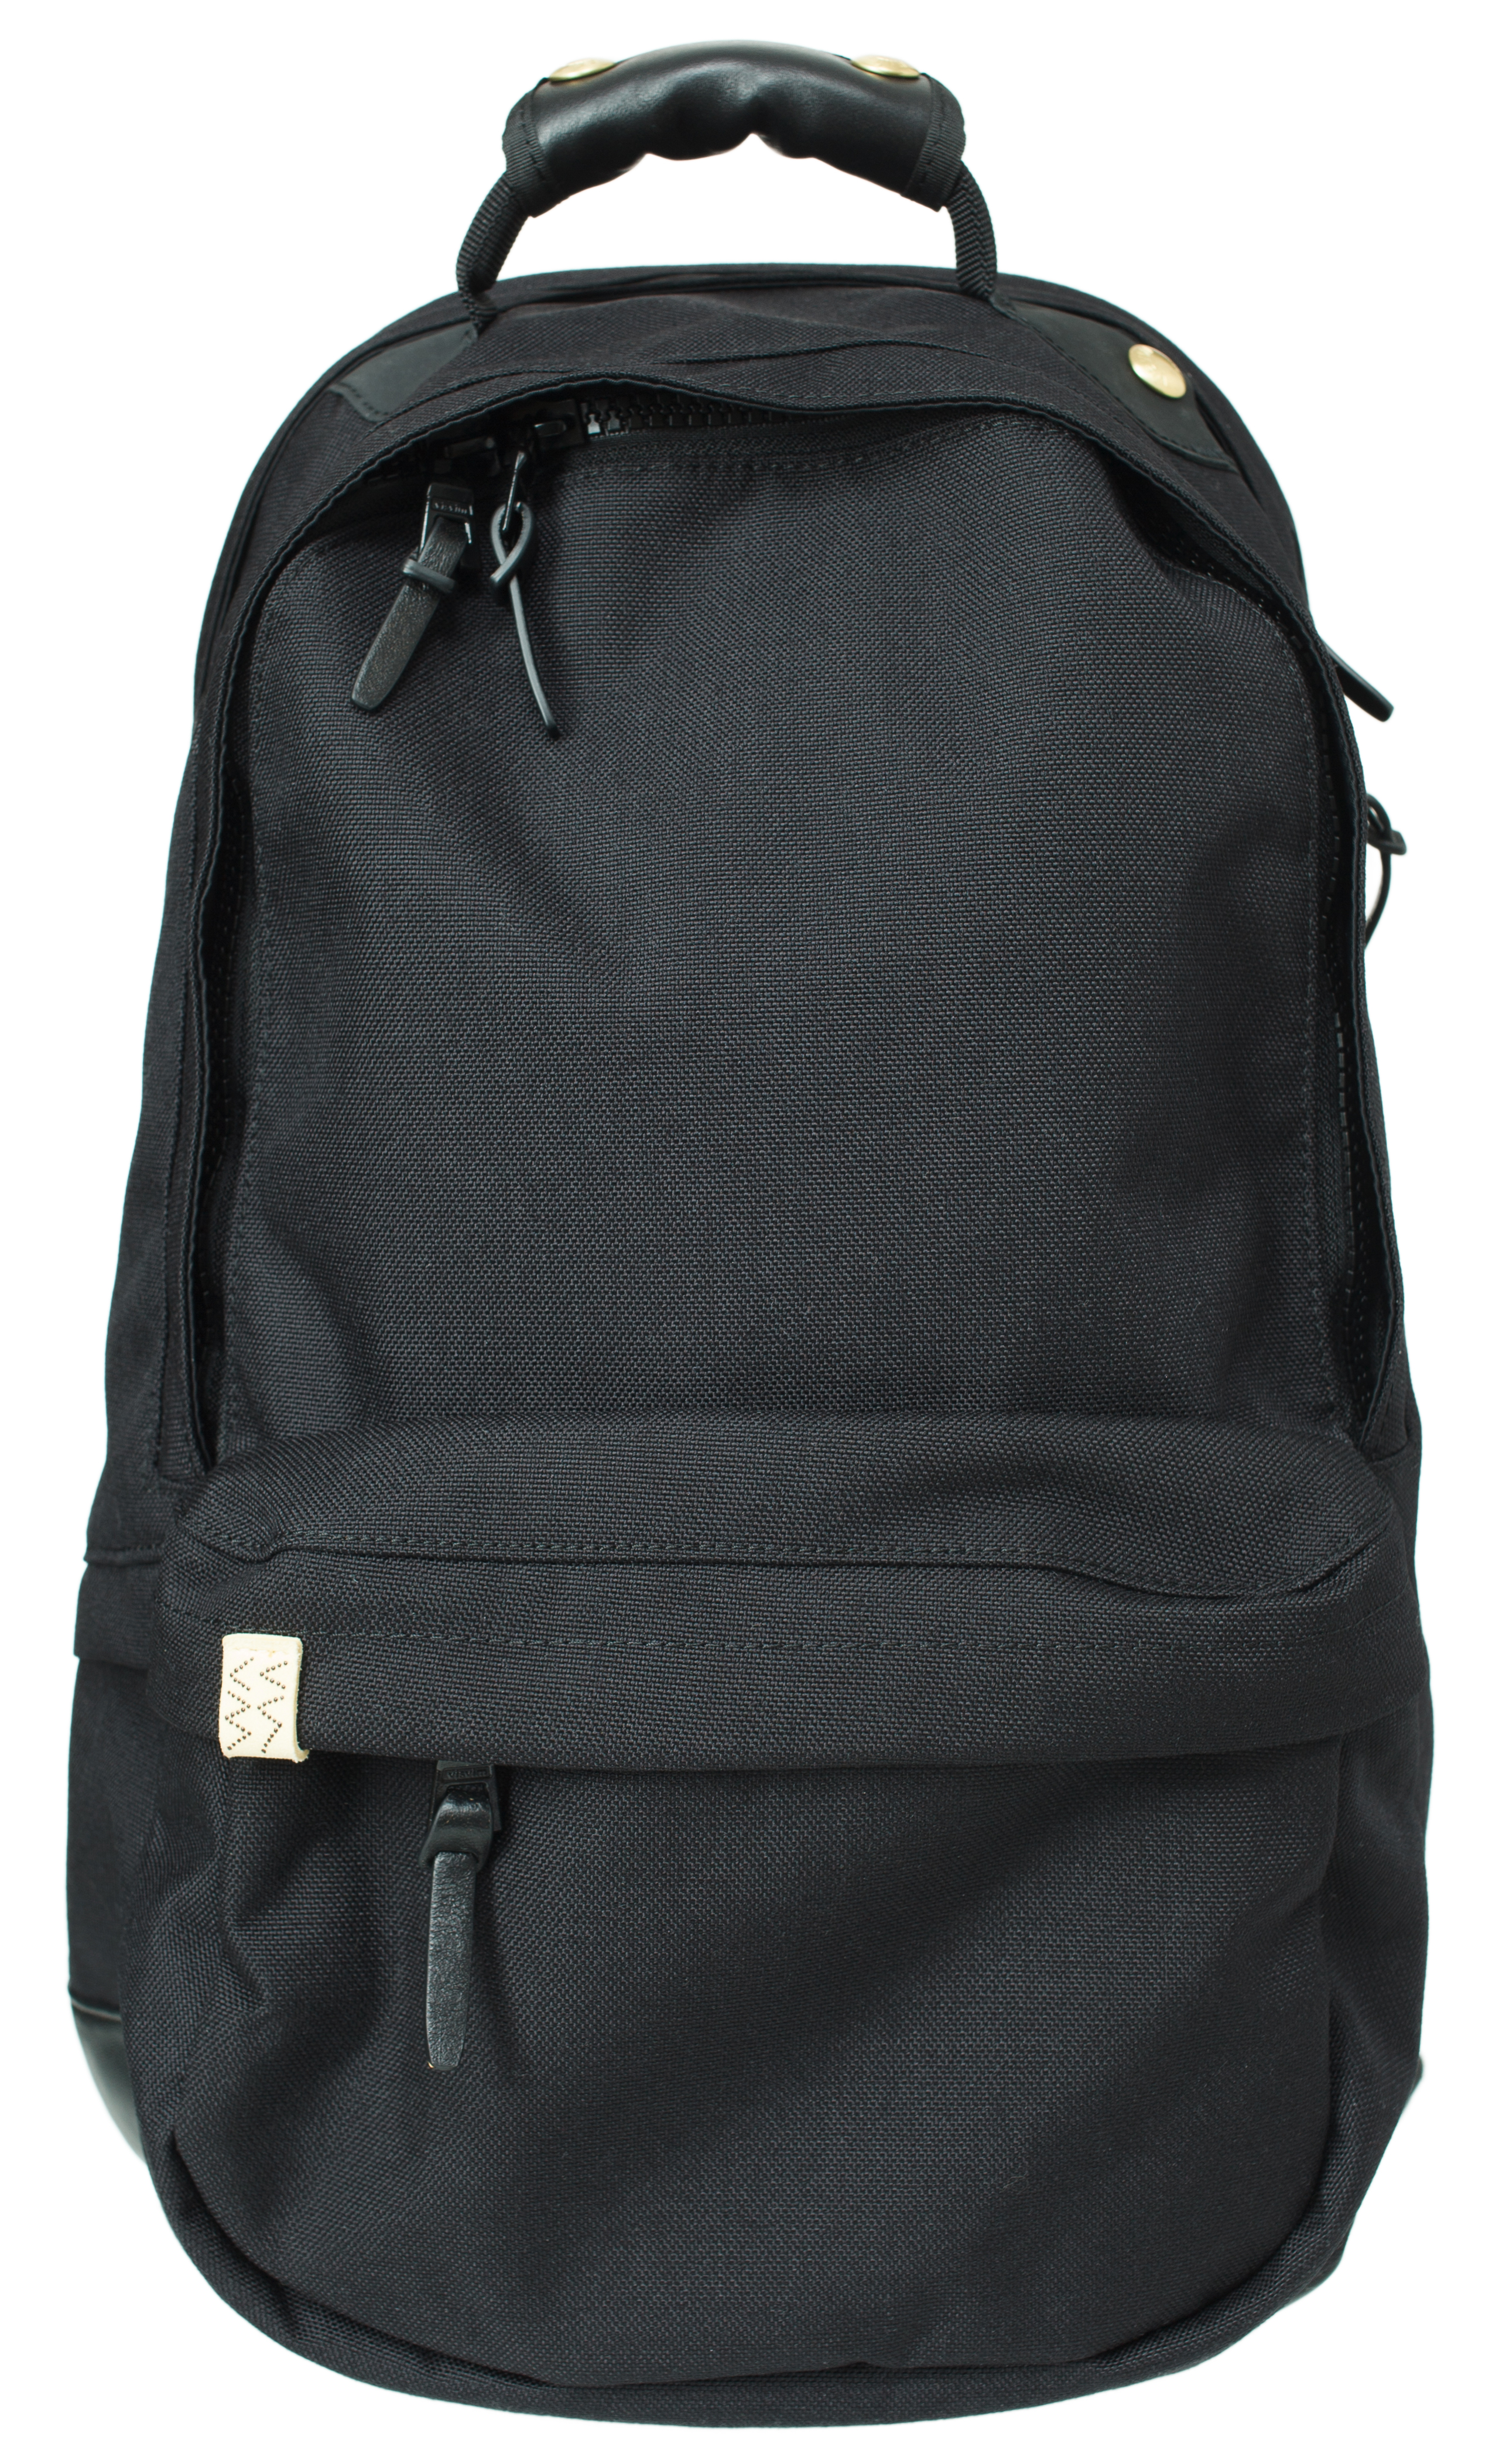 Cordura 22L backpack